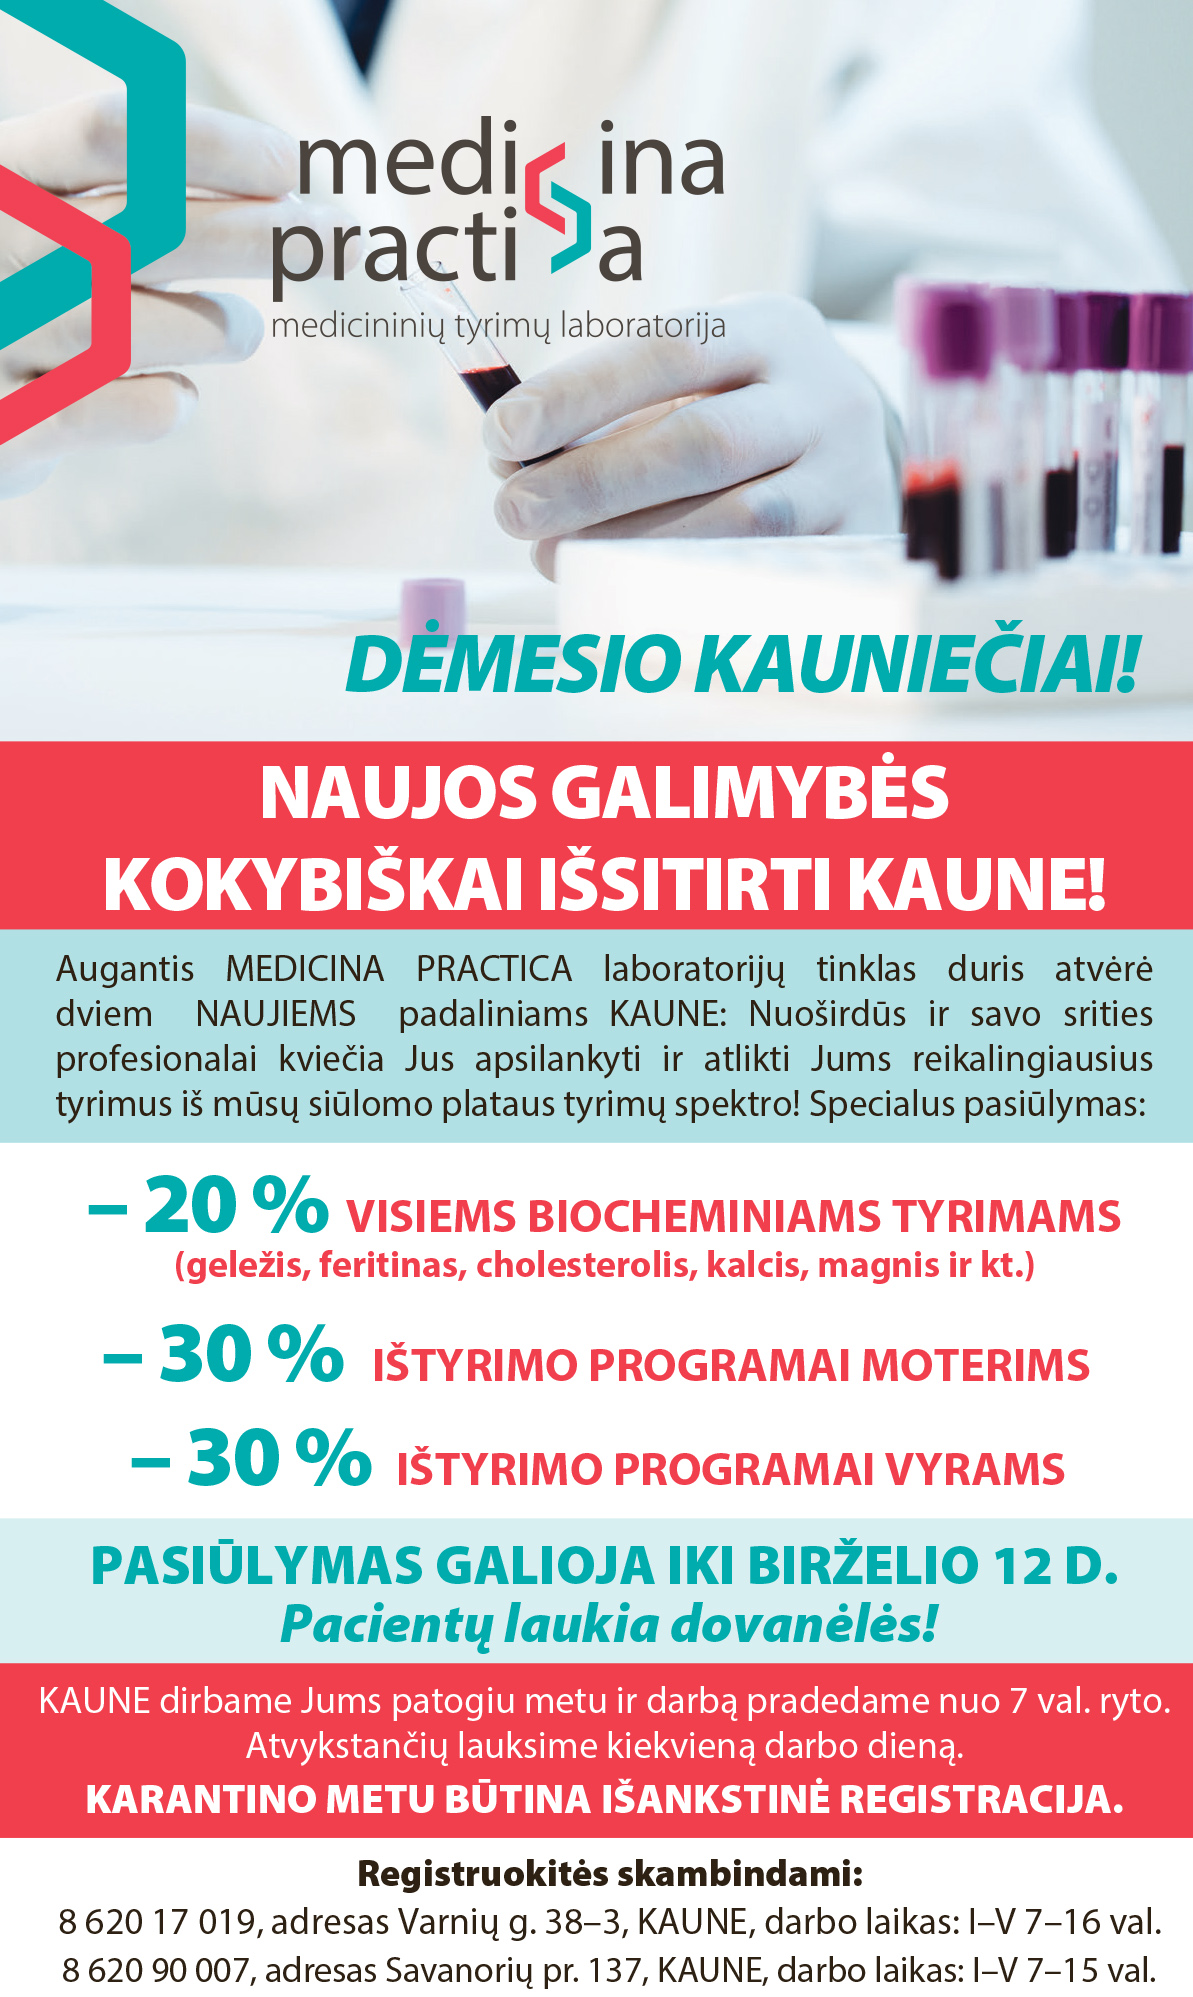 https://kauno.diena.lt/sites/default/files/Vilniausdiena/Vartotoju%20zona/v.virkutyte/medicinapractica.jpg